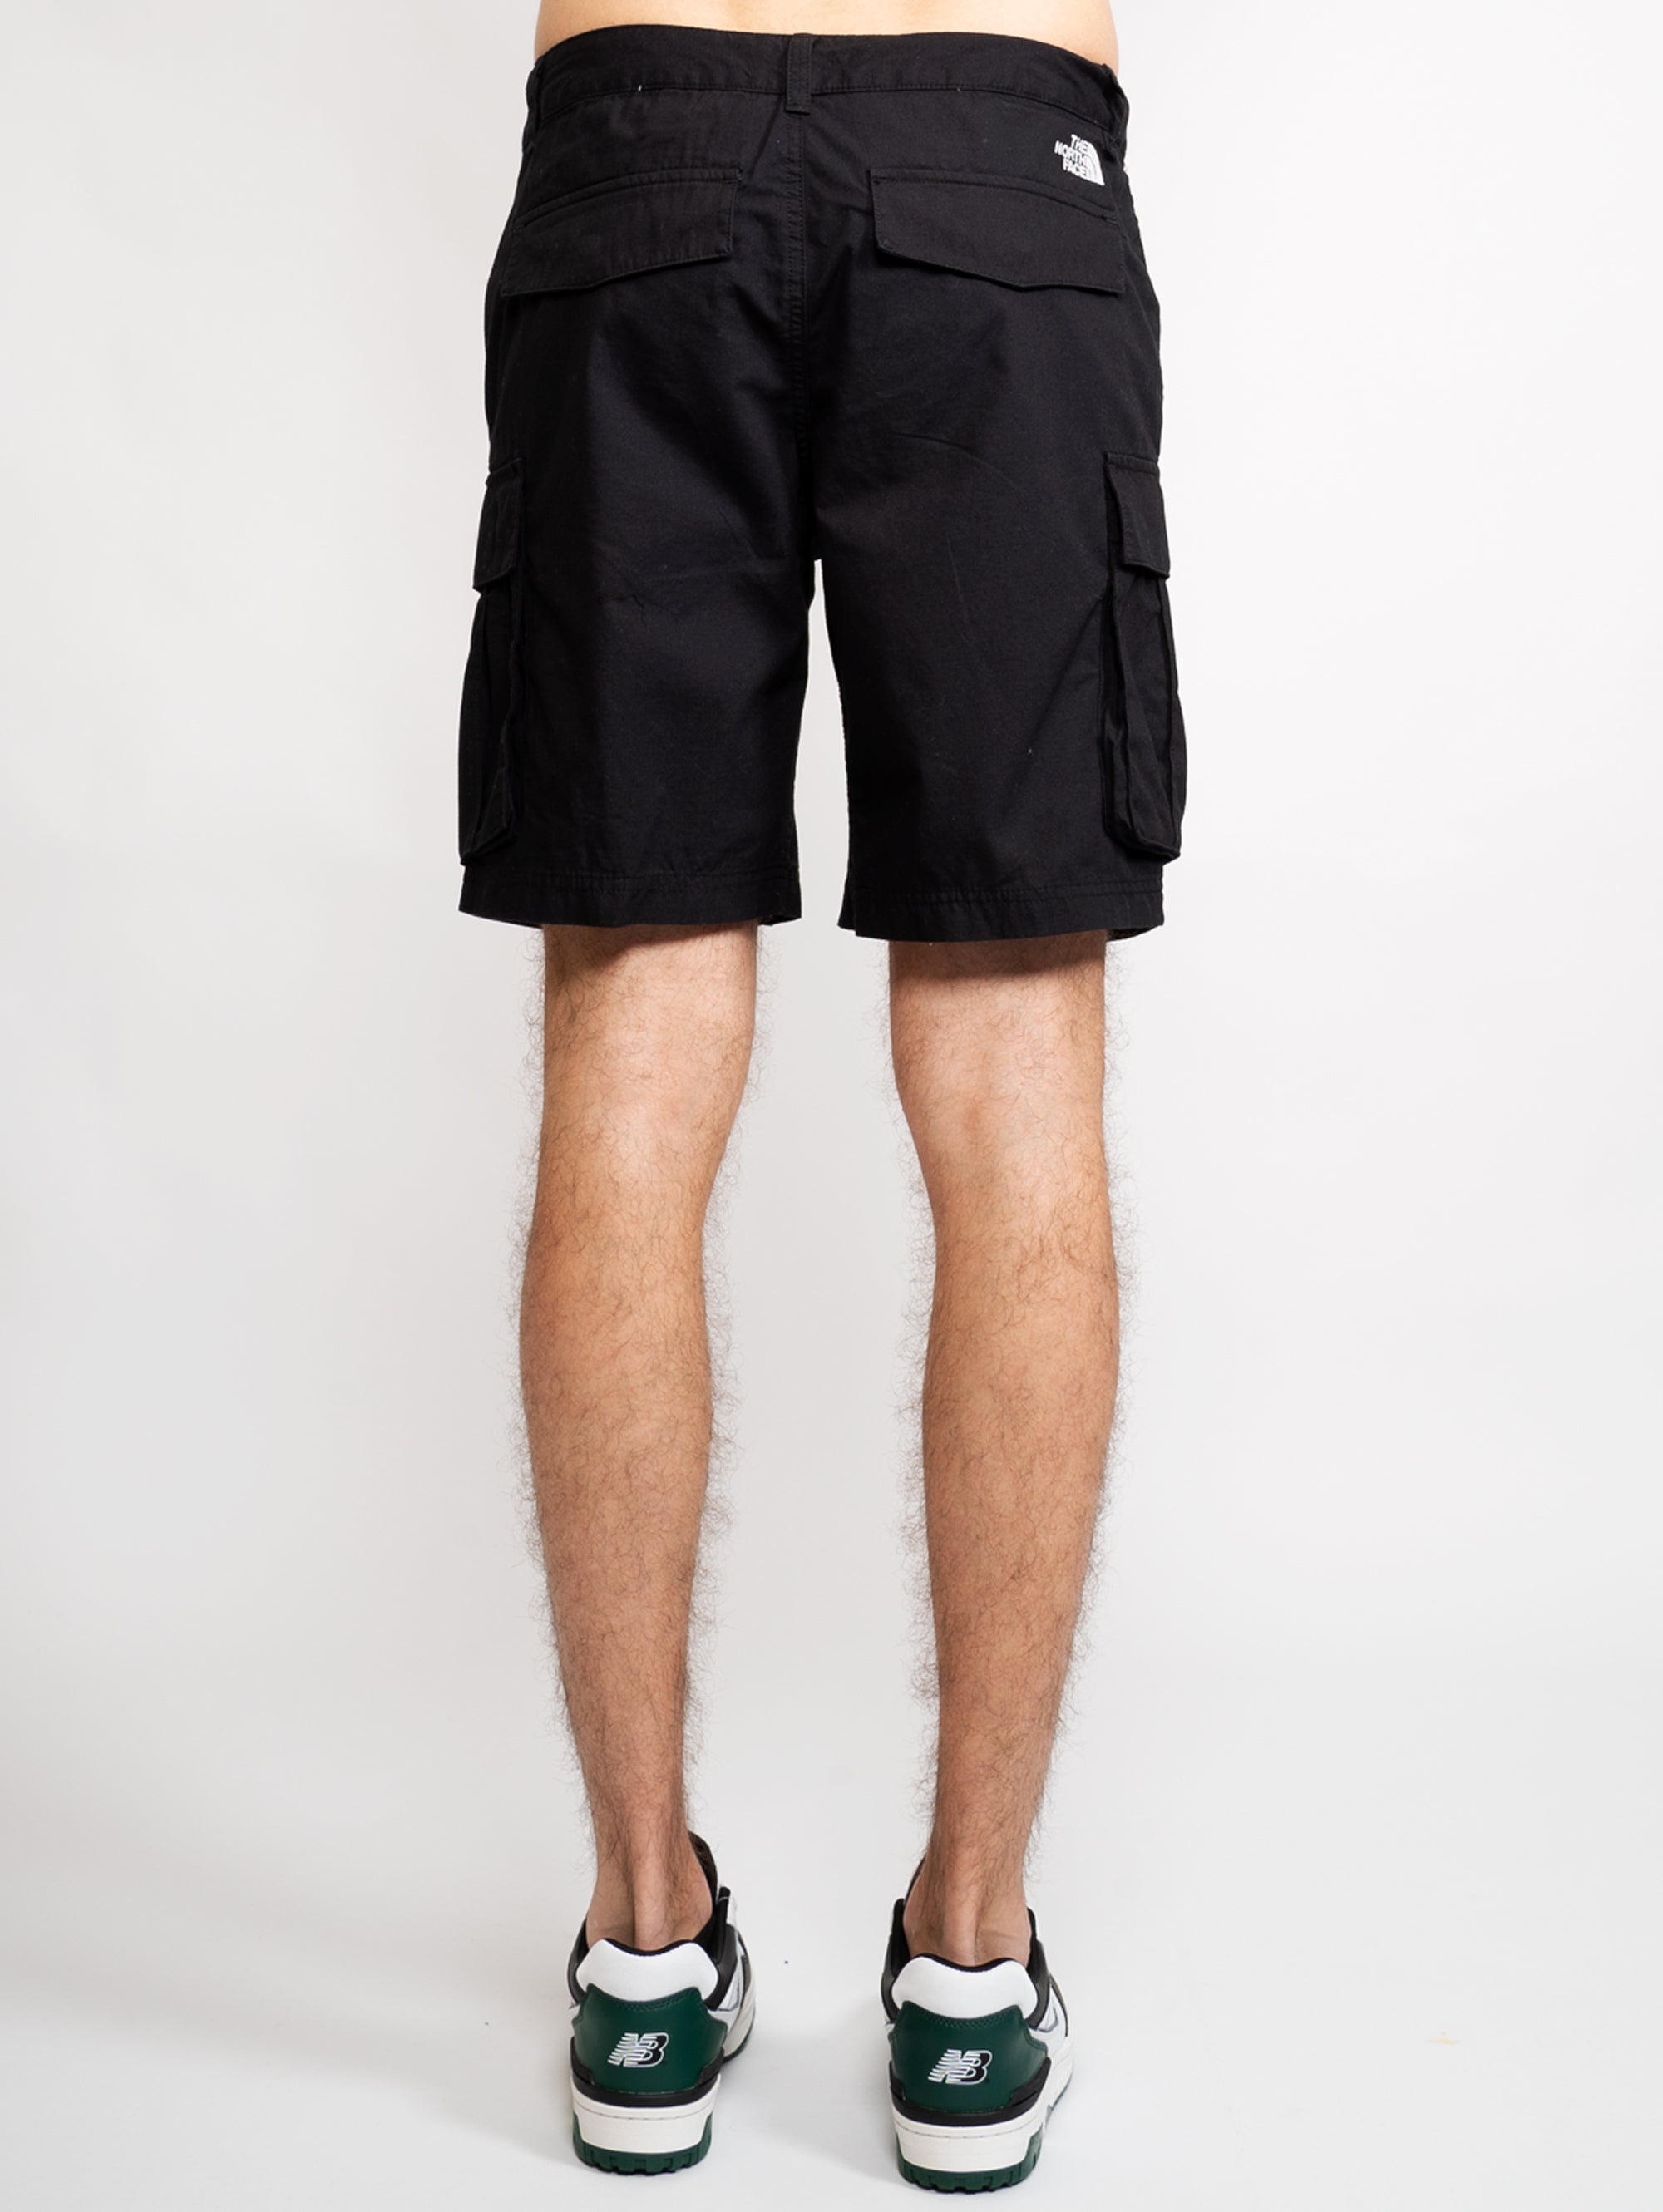 Cargo Shorts in Black Ripstop Cotton